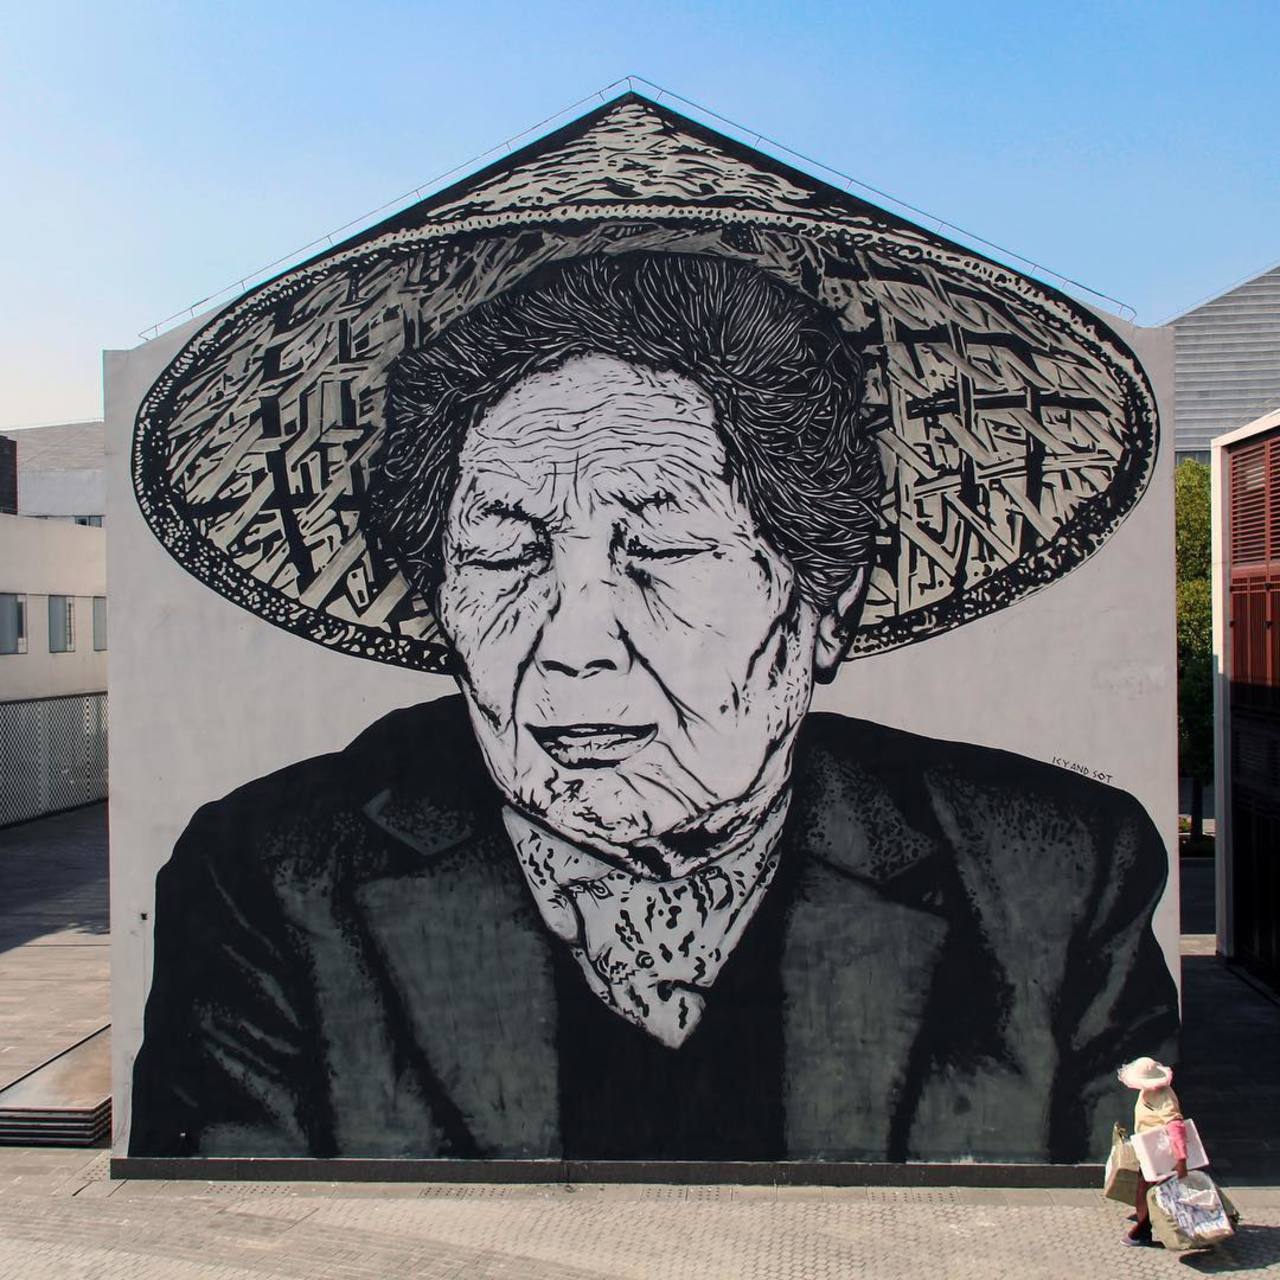 Icy & Sot create a new mural in Shanghai, China. #StreetArt #Graffiti #Mural http://t.co/NLpBFW5N70